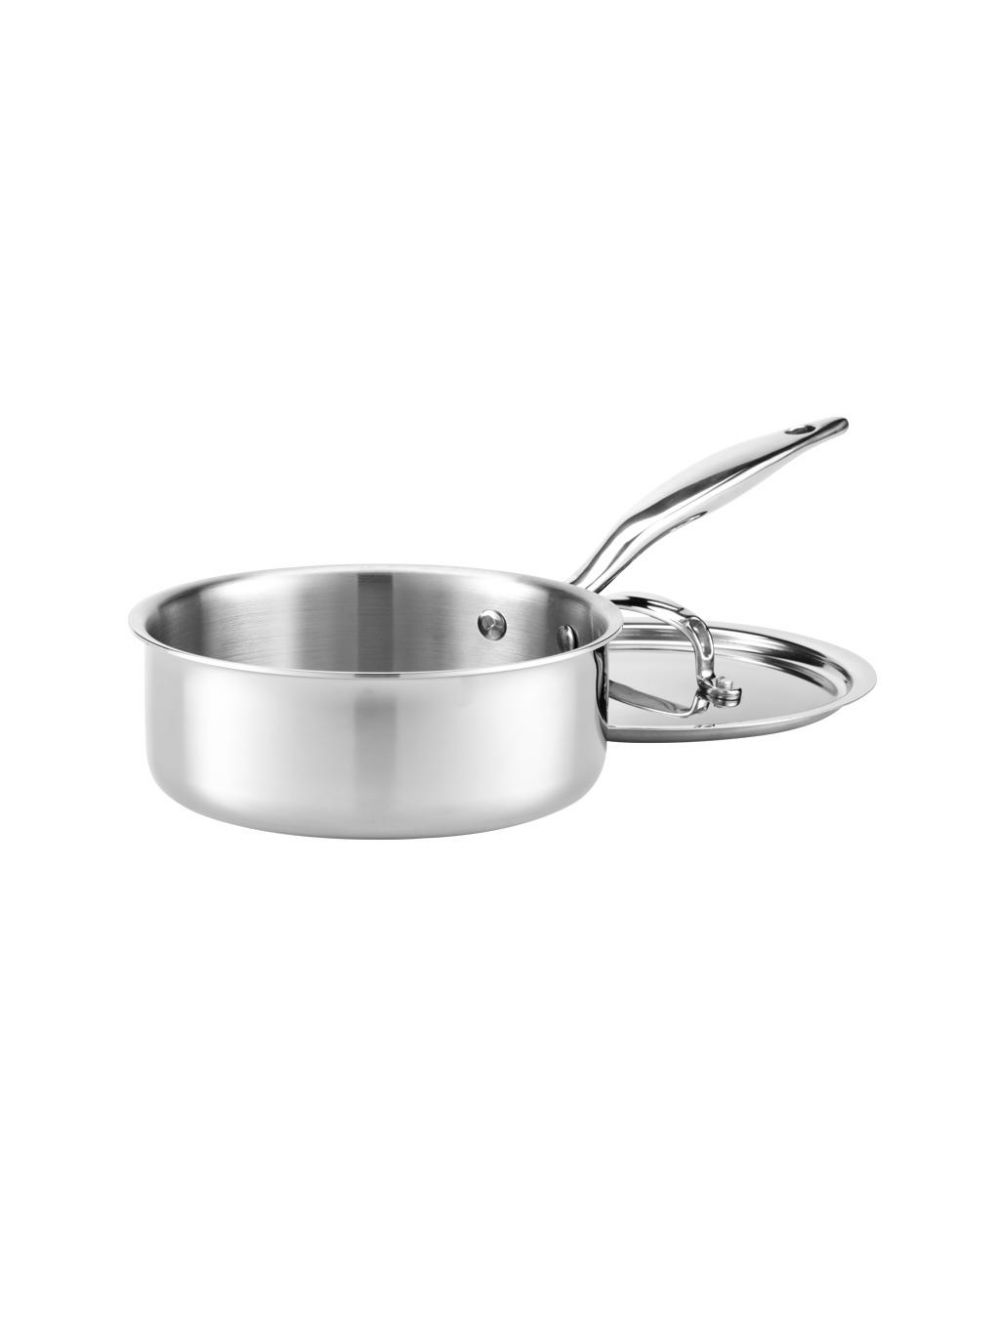 2 Quart Saucepan with Lid, Stainless Steel Pot, Sauce Pan, Cooking